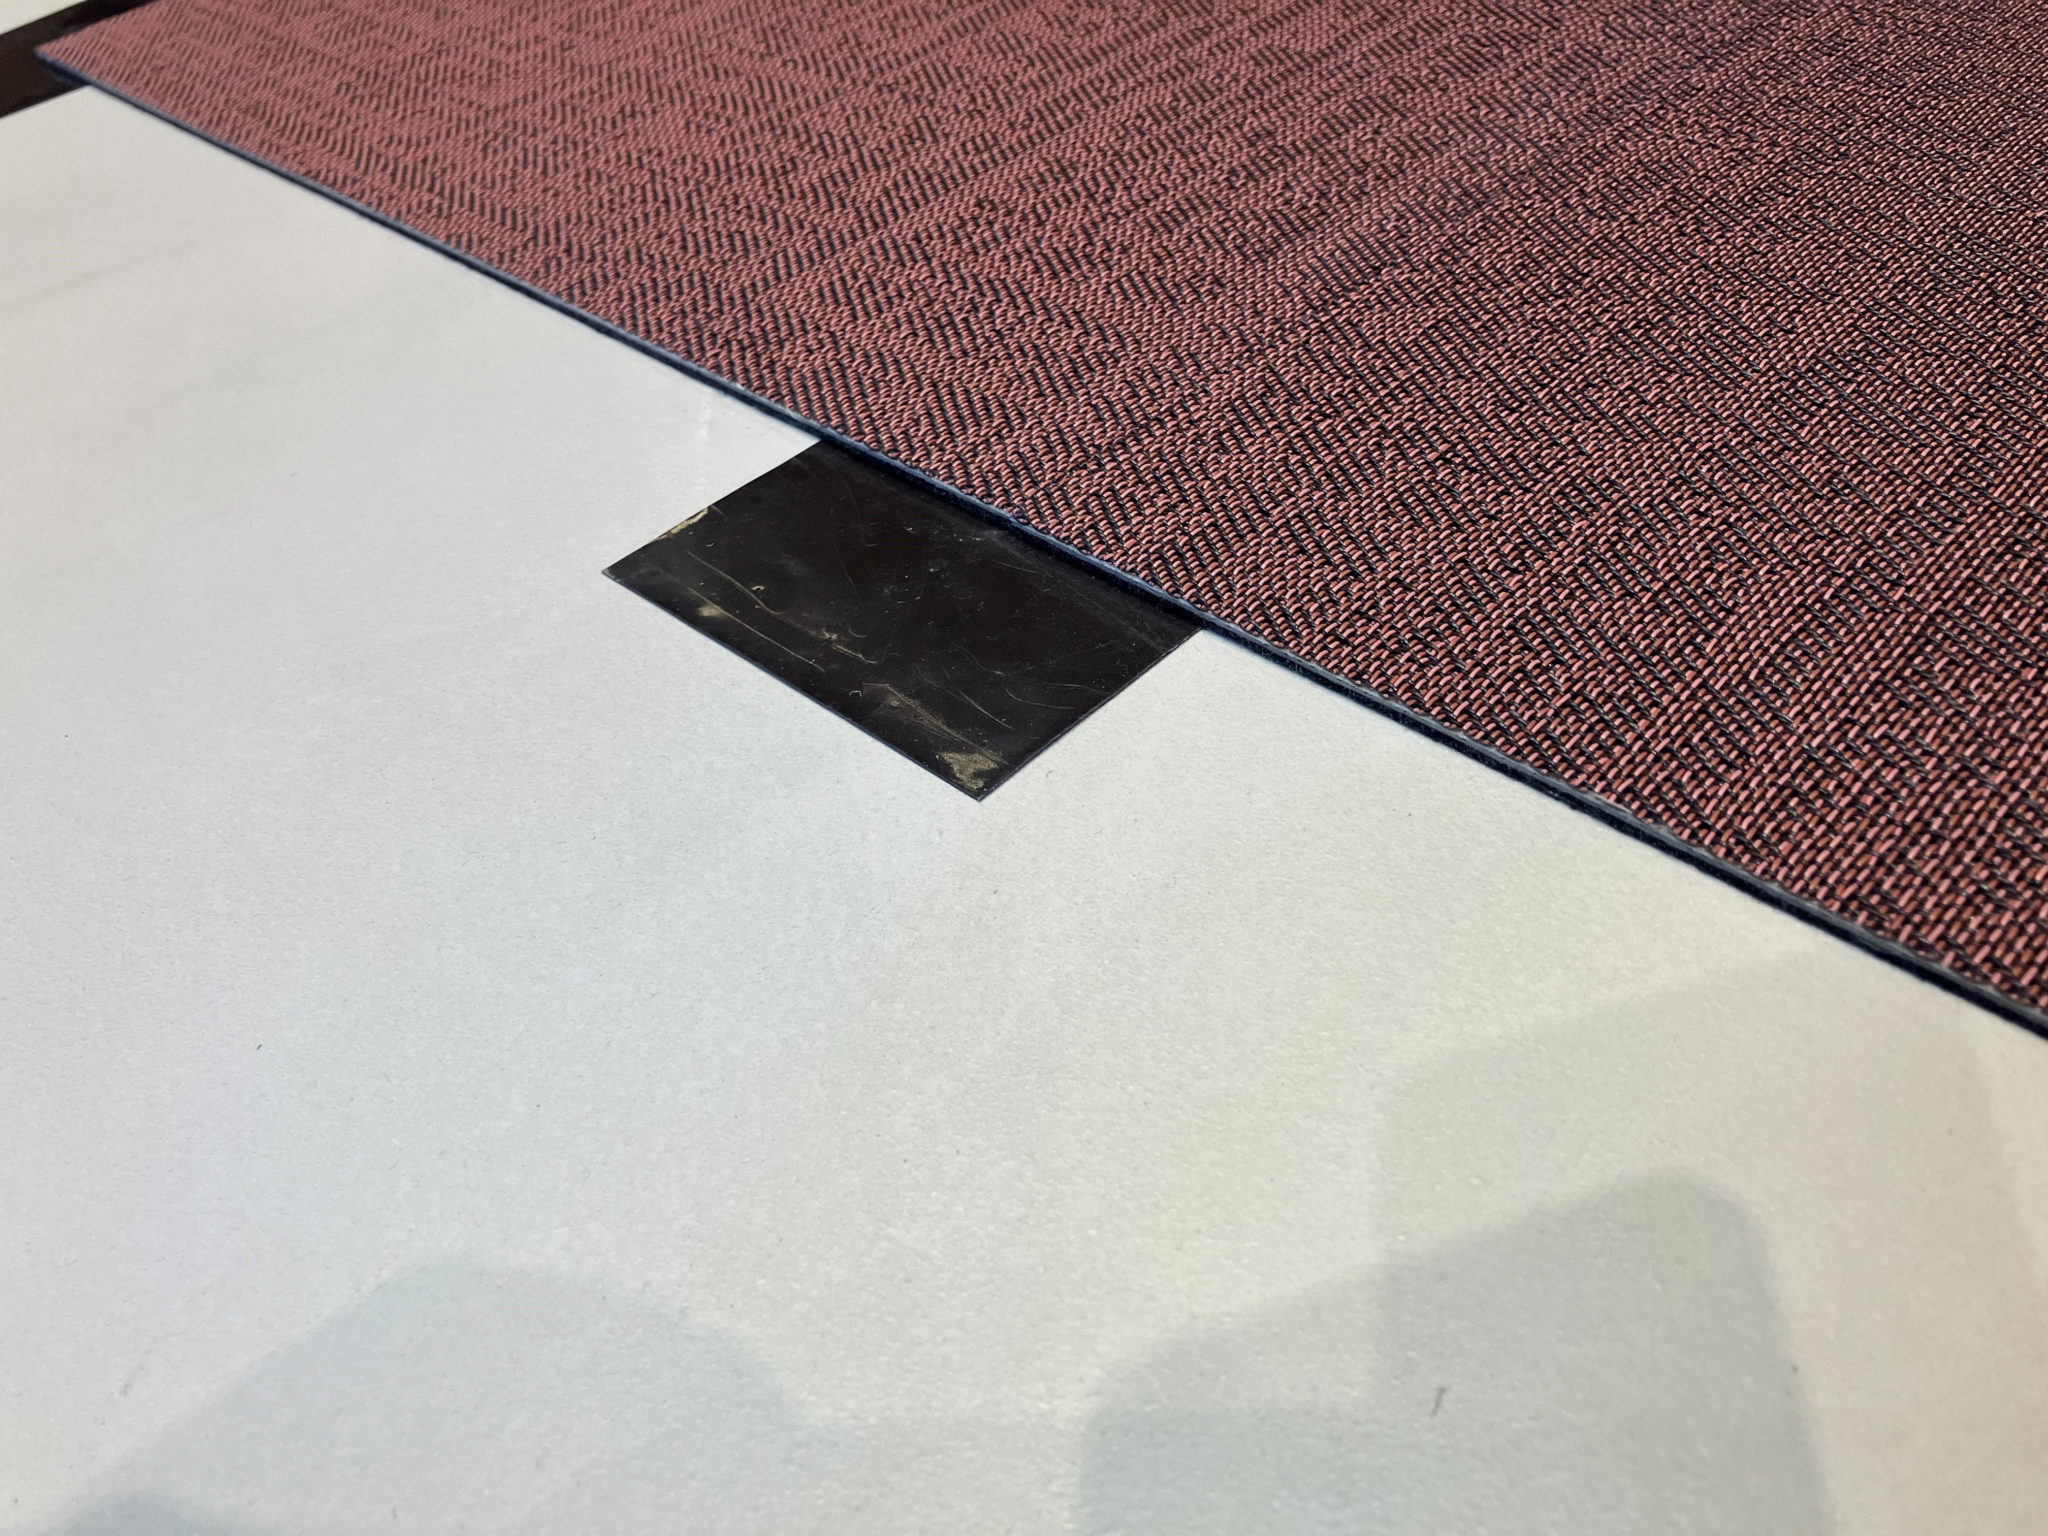 ntgrate woven vinyl flooring with IOBAC adhesive-free MagTabs